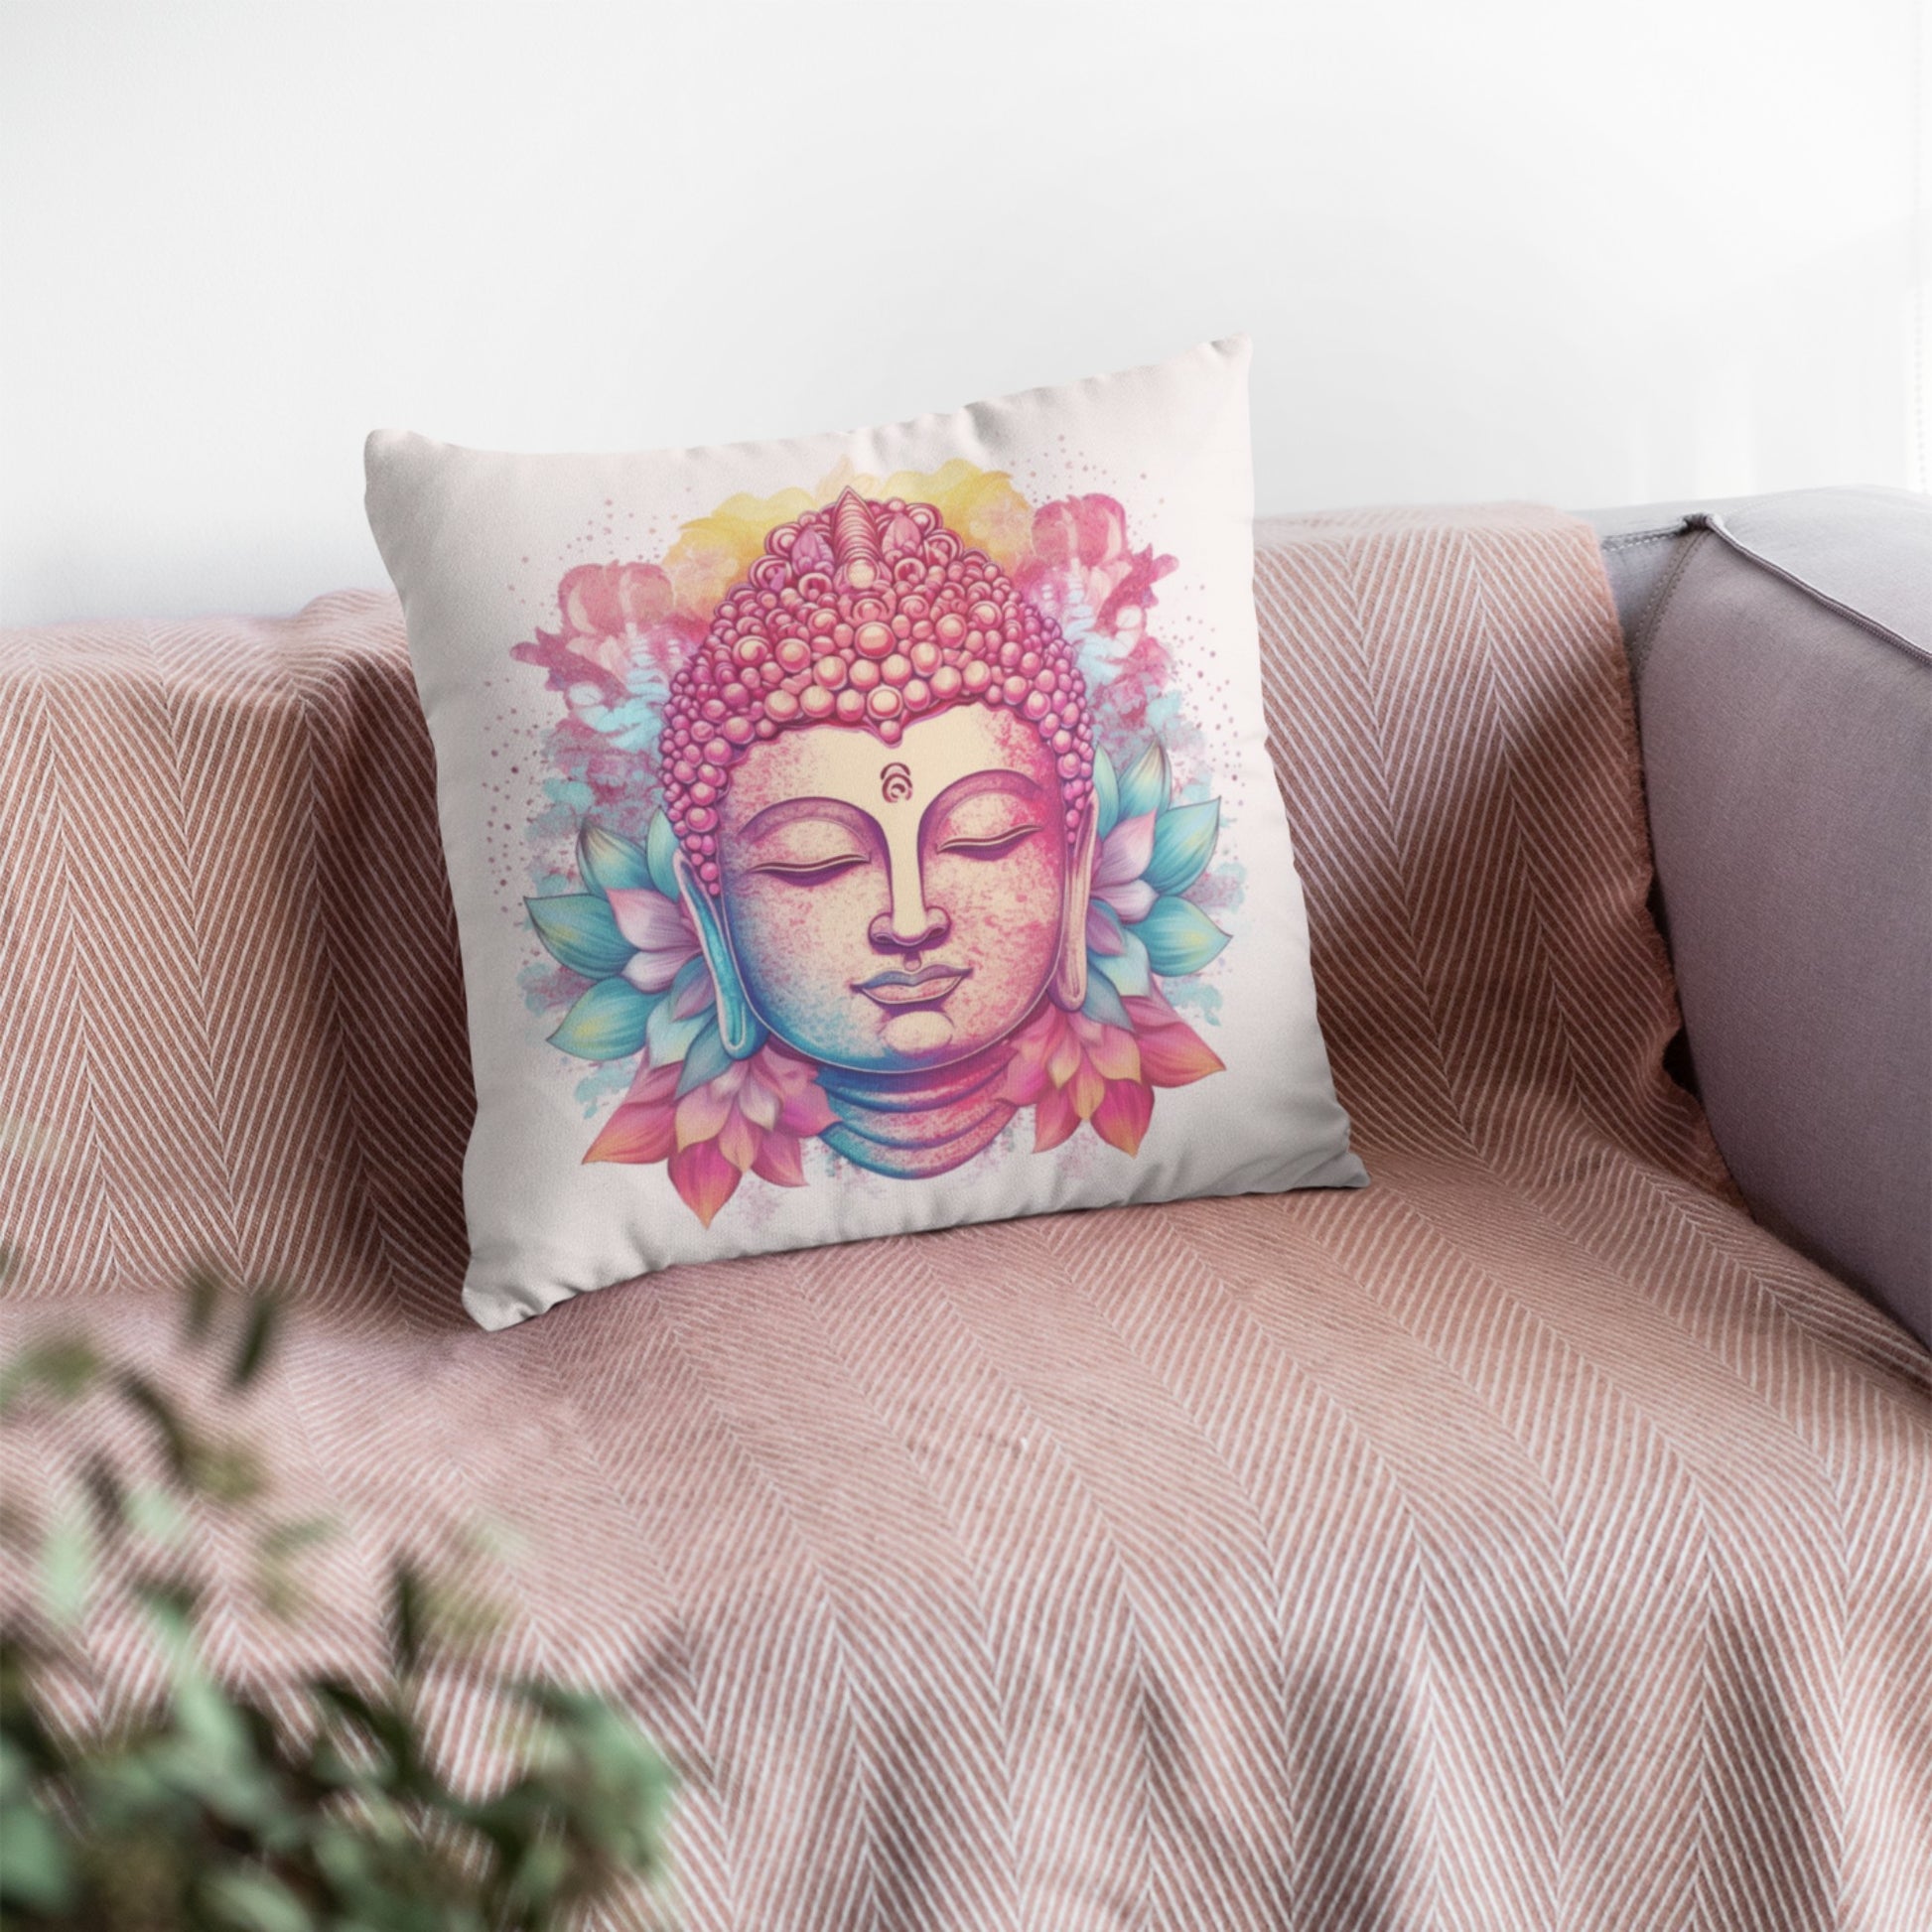 Free-spirited Boho Pillow Design